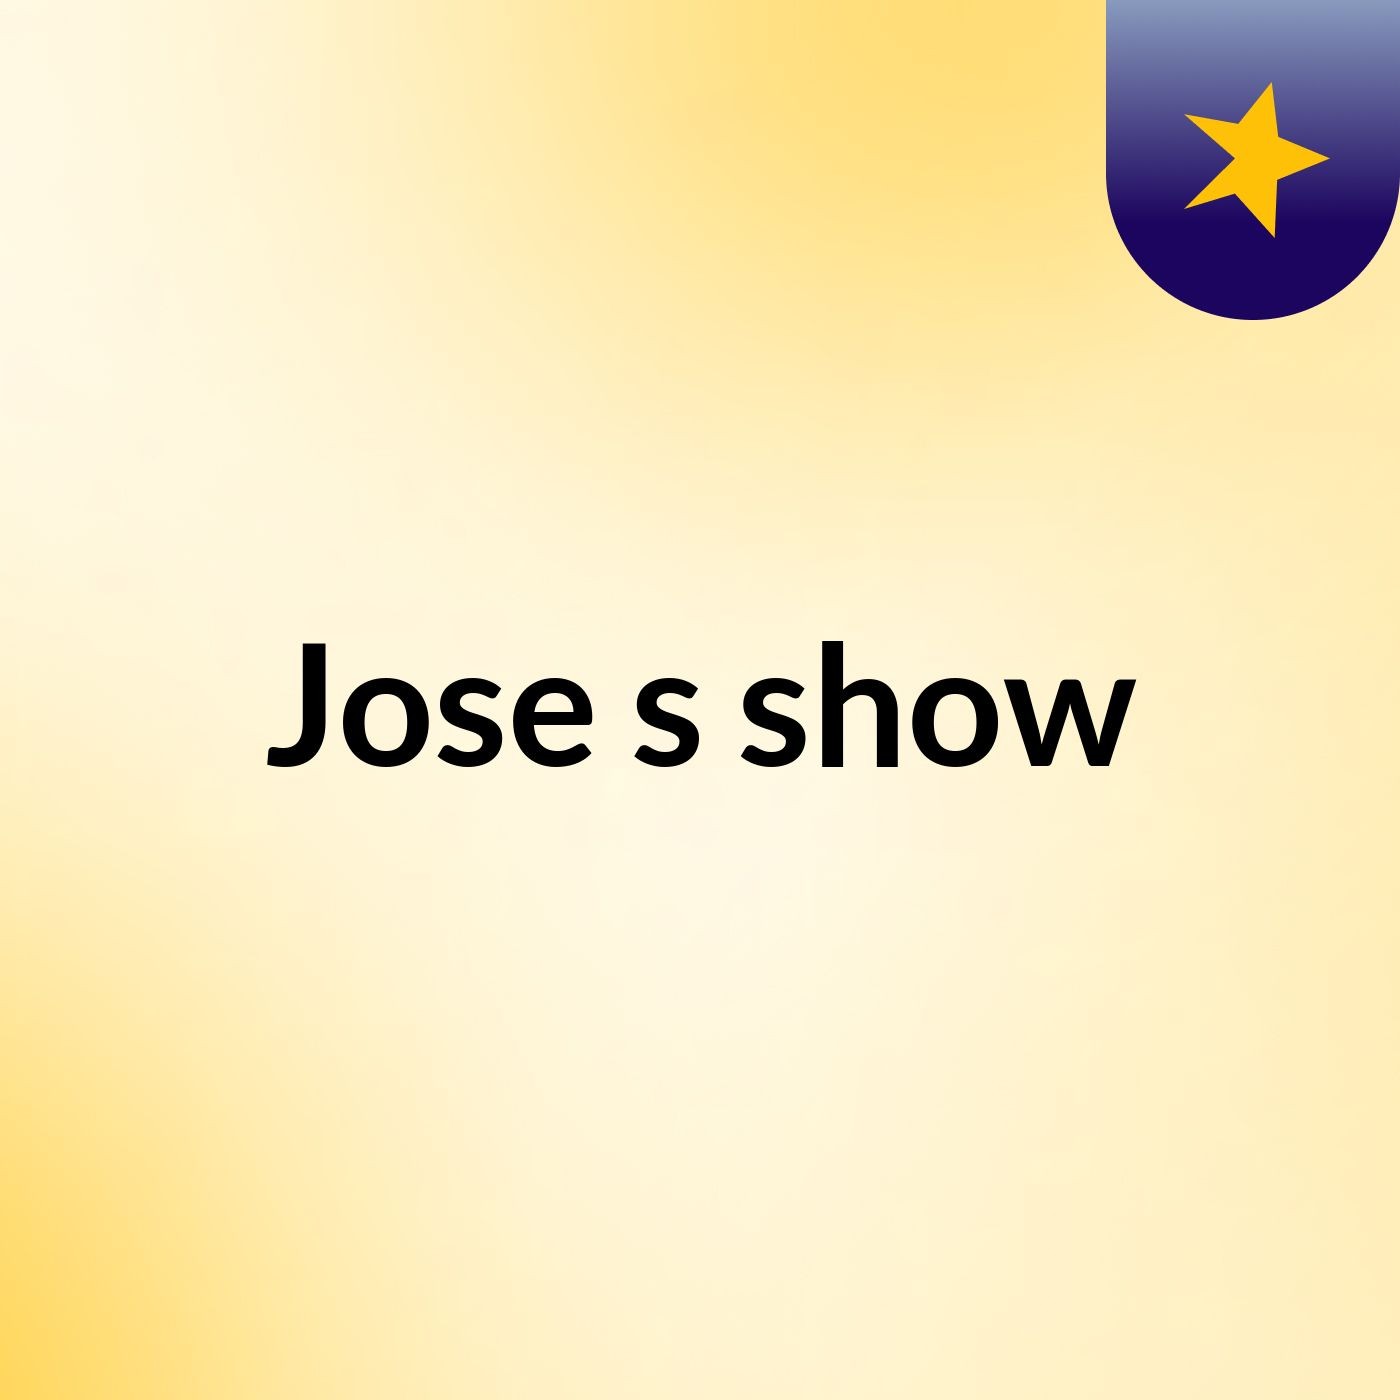 Jose's show